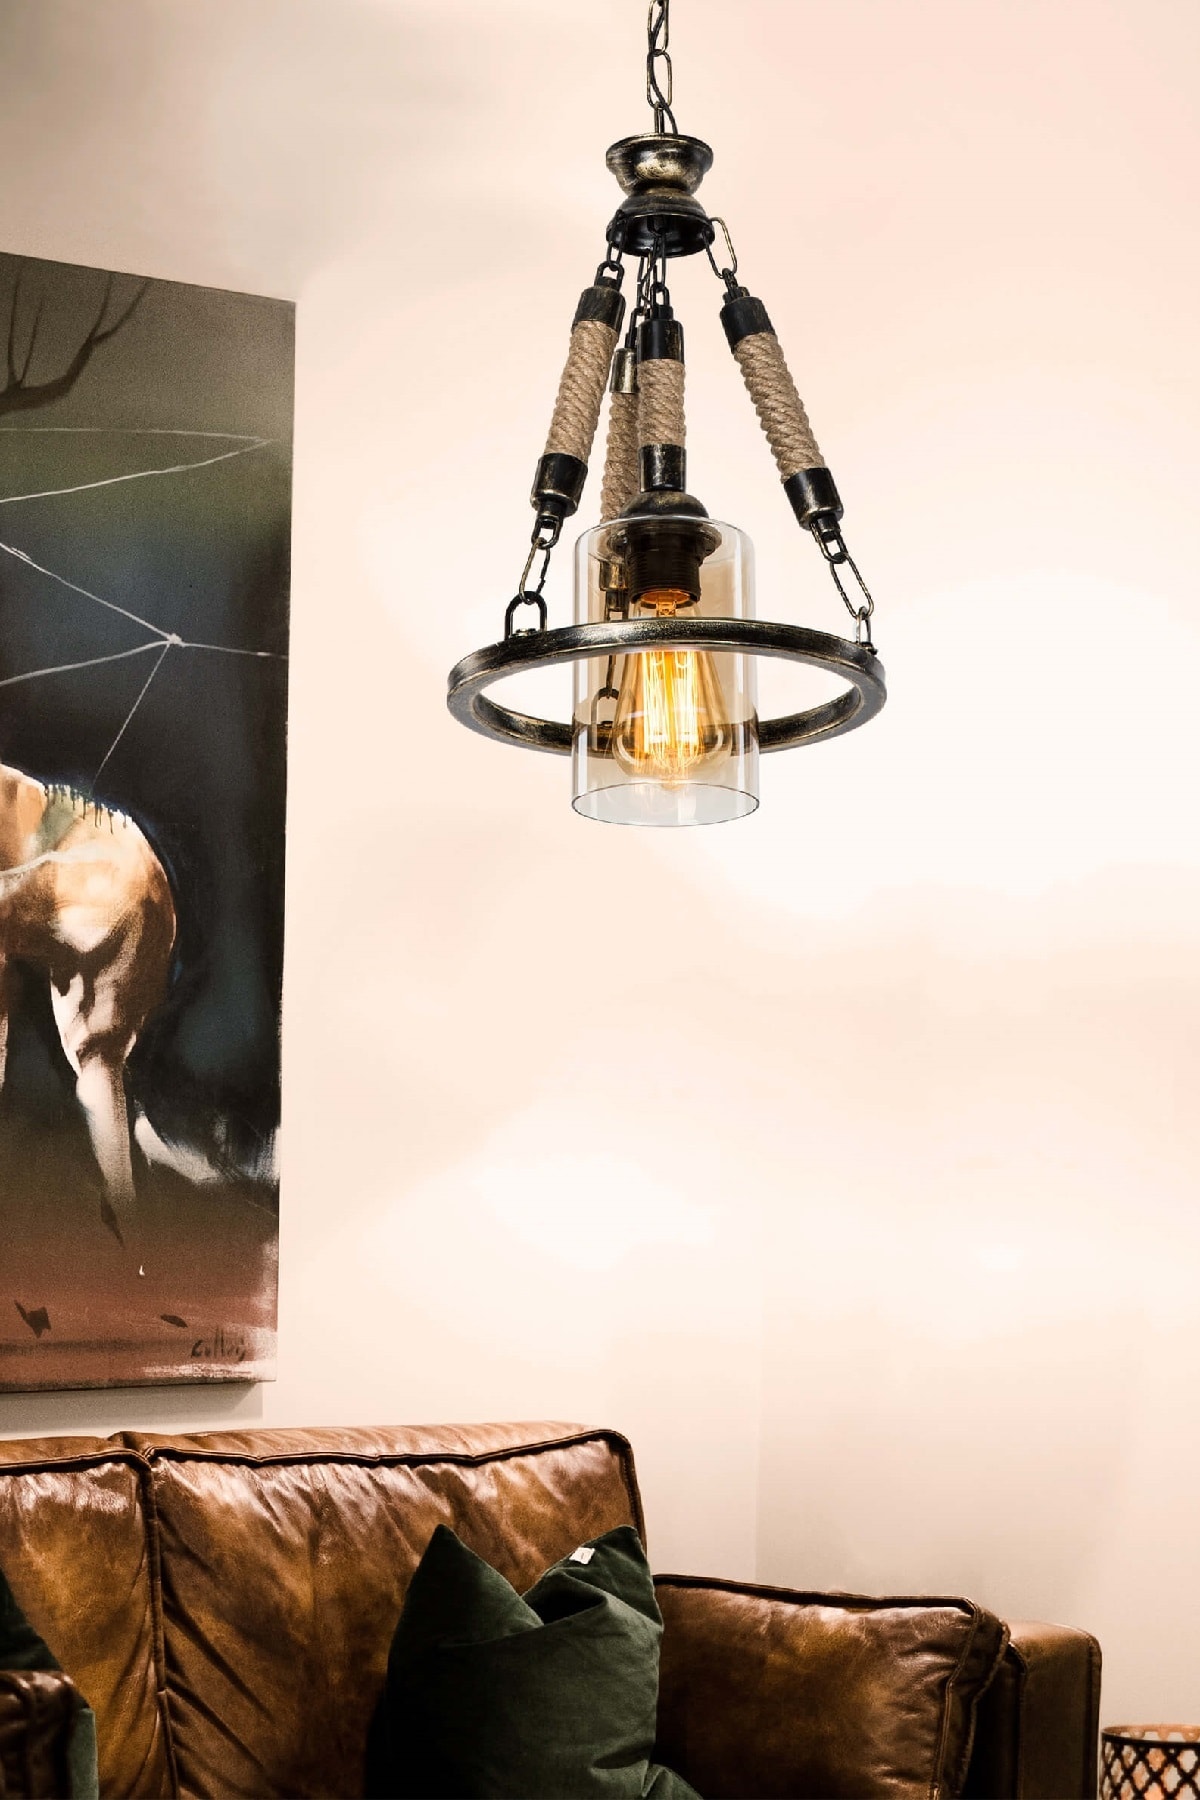 1-Light Pendant/Hanging Lamp